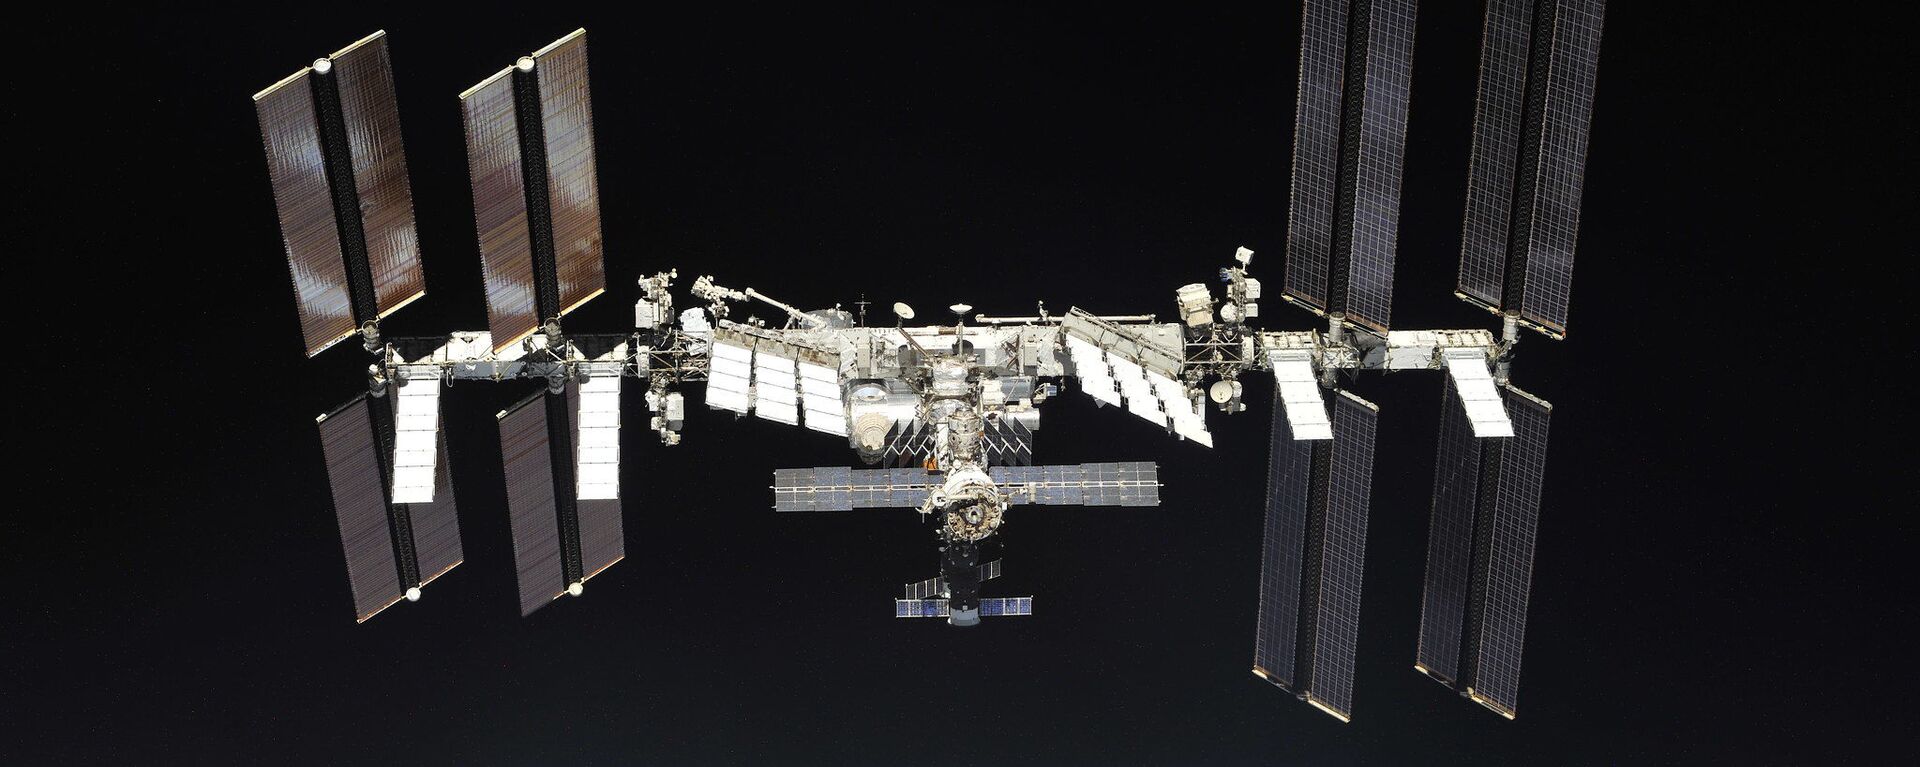 Estación Espacial Internacional (EEI) - Sputnik Mundo, 1920, 31.07.2021